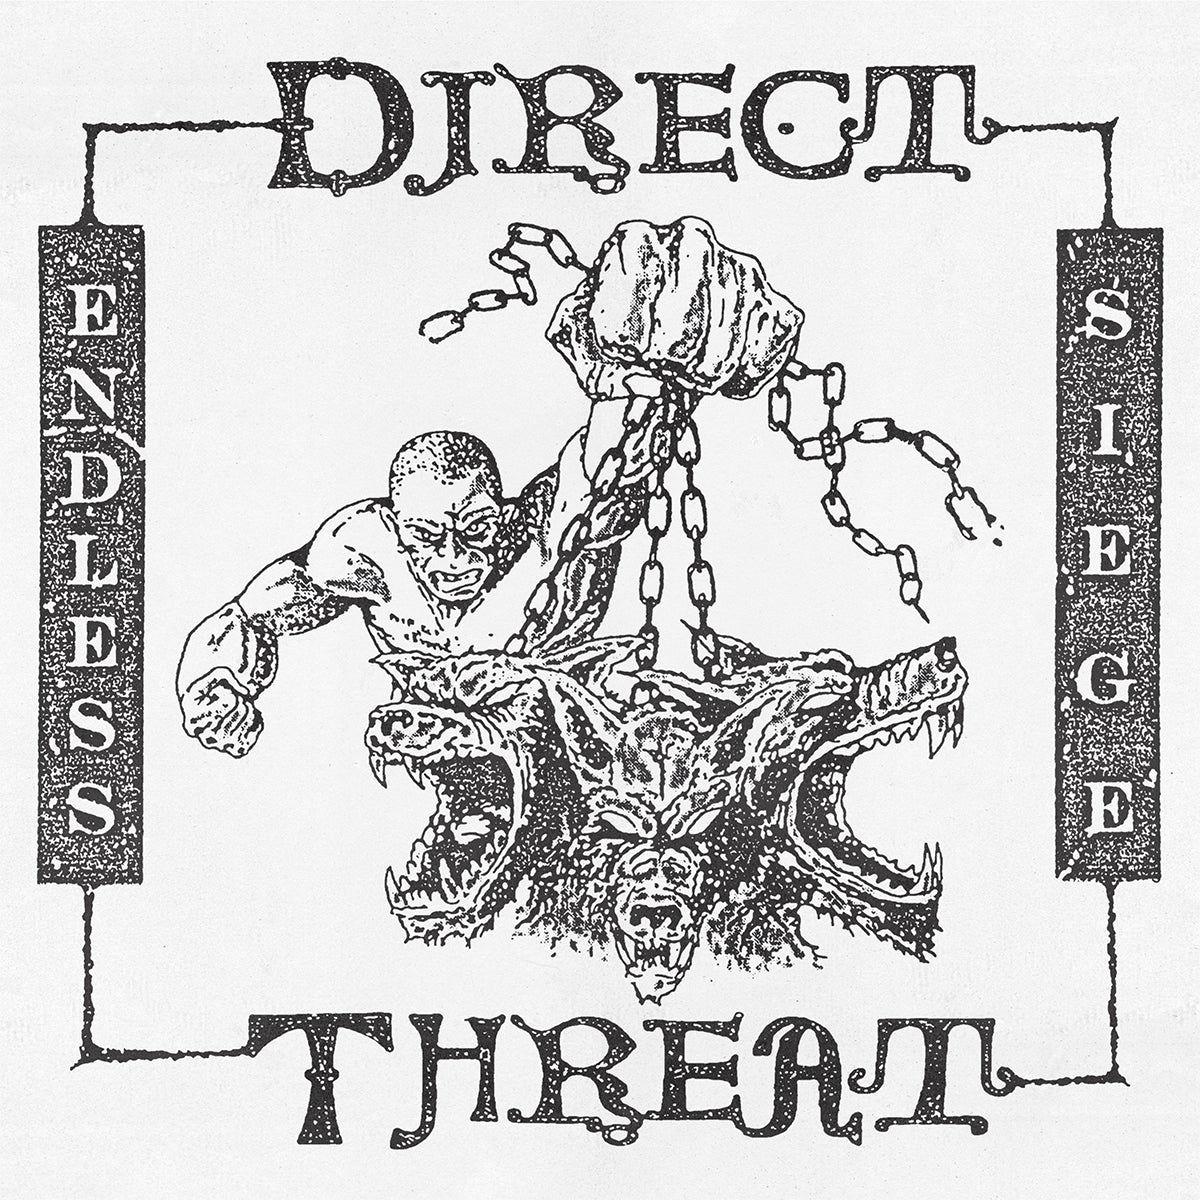 DIRECT THREAT "Endless Siege" 7"